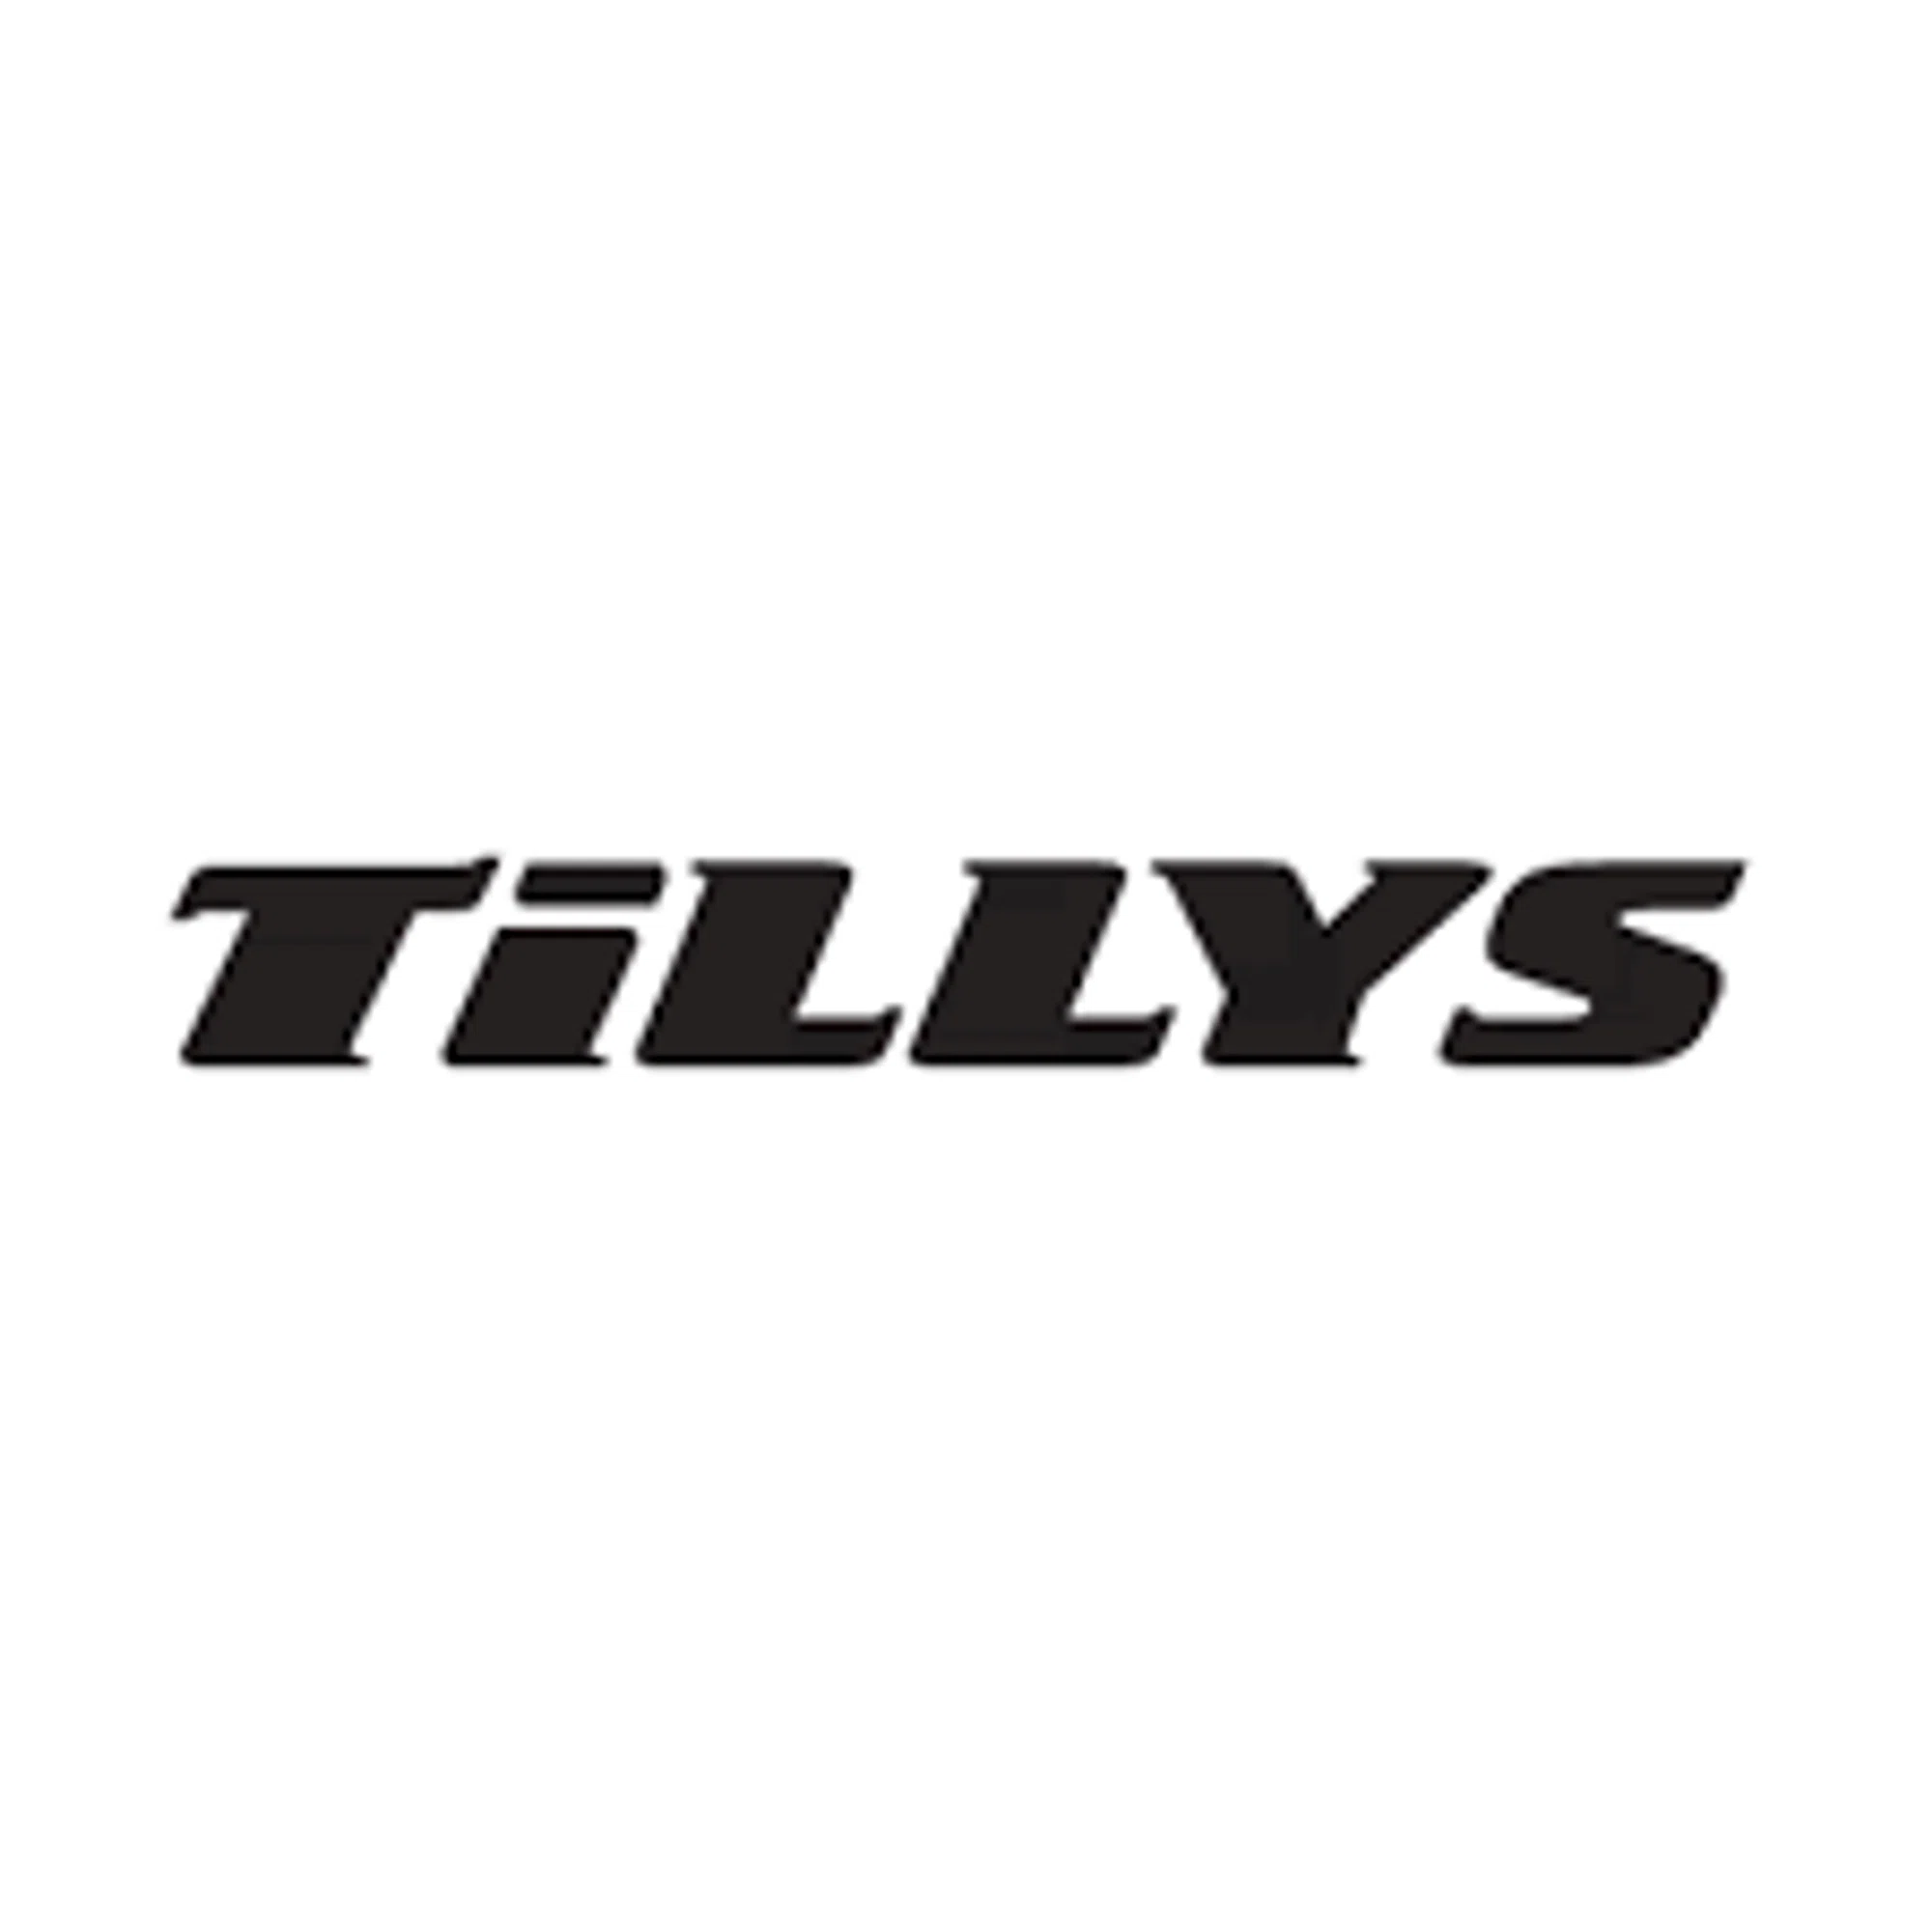 Tillys Promo Codes